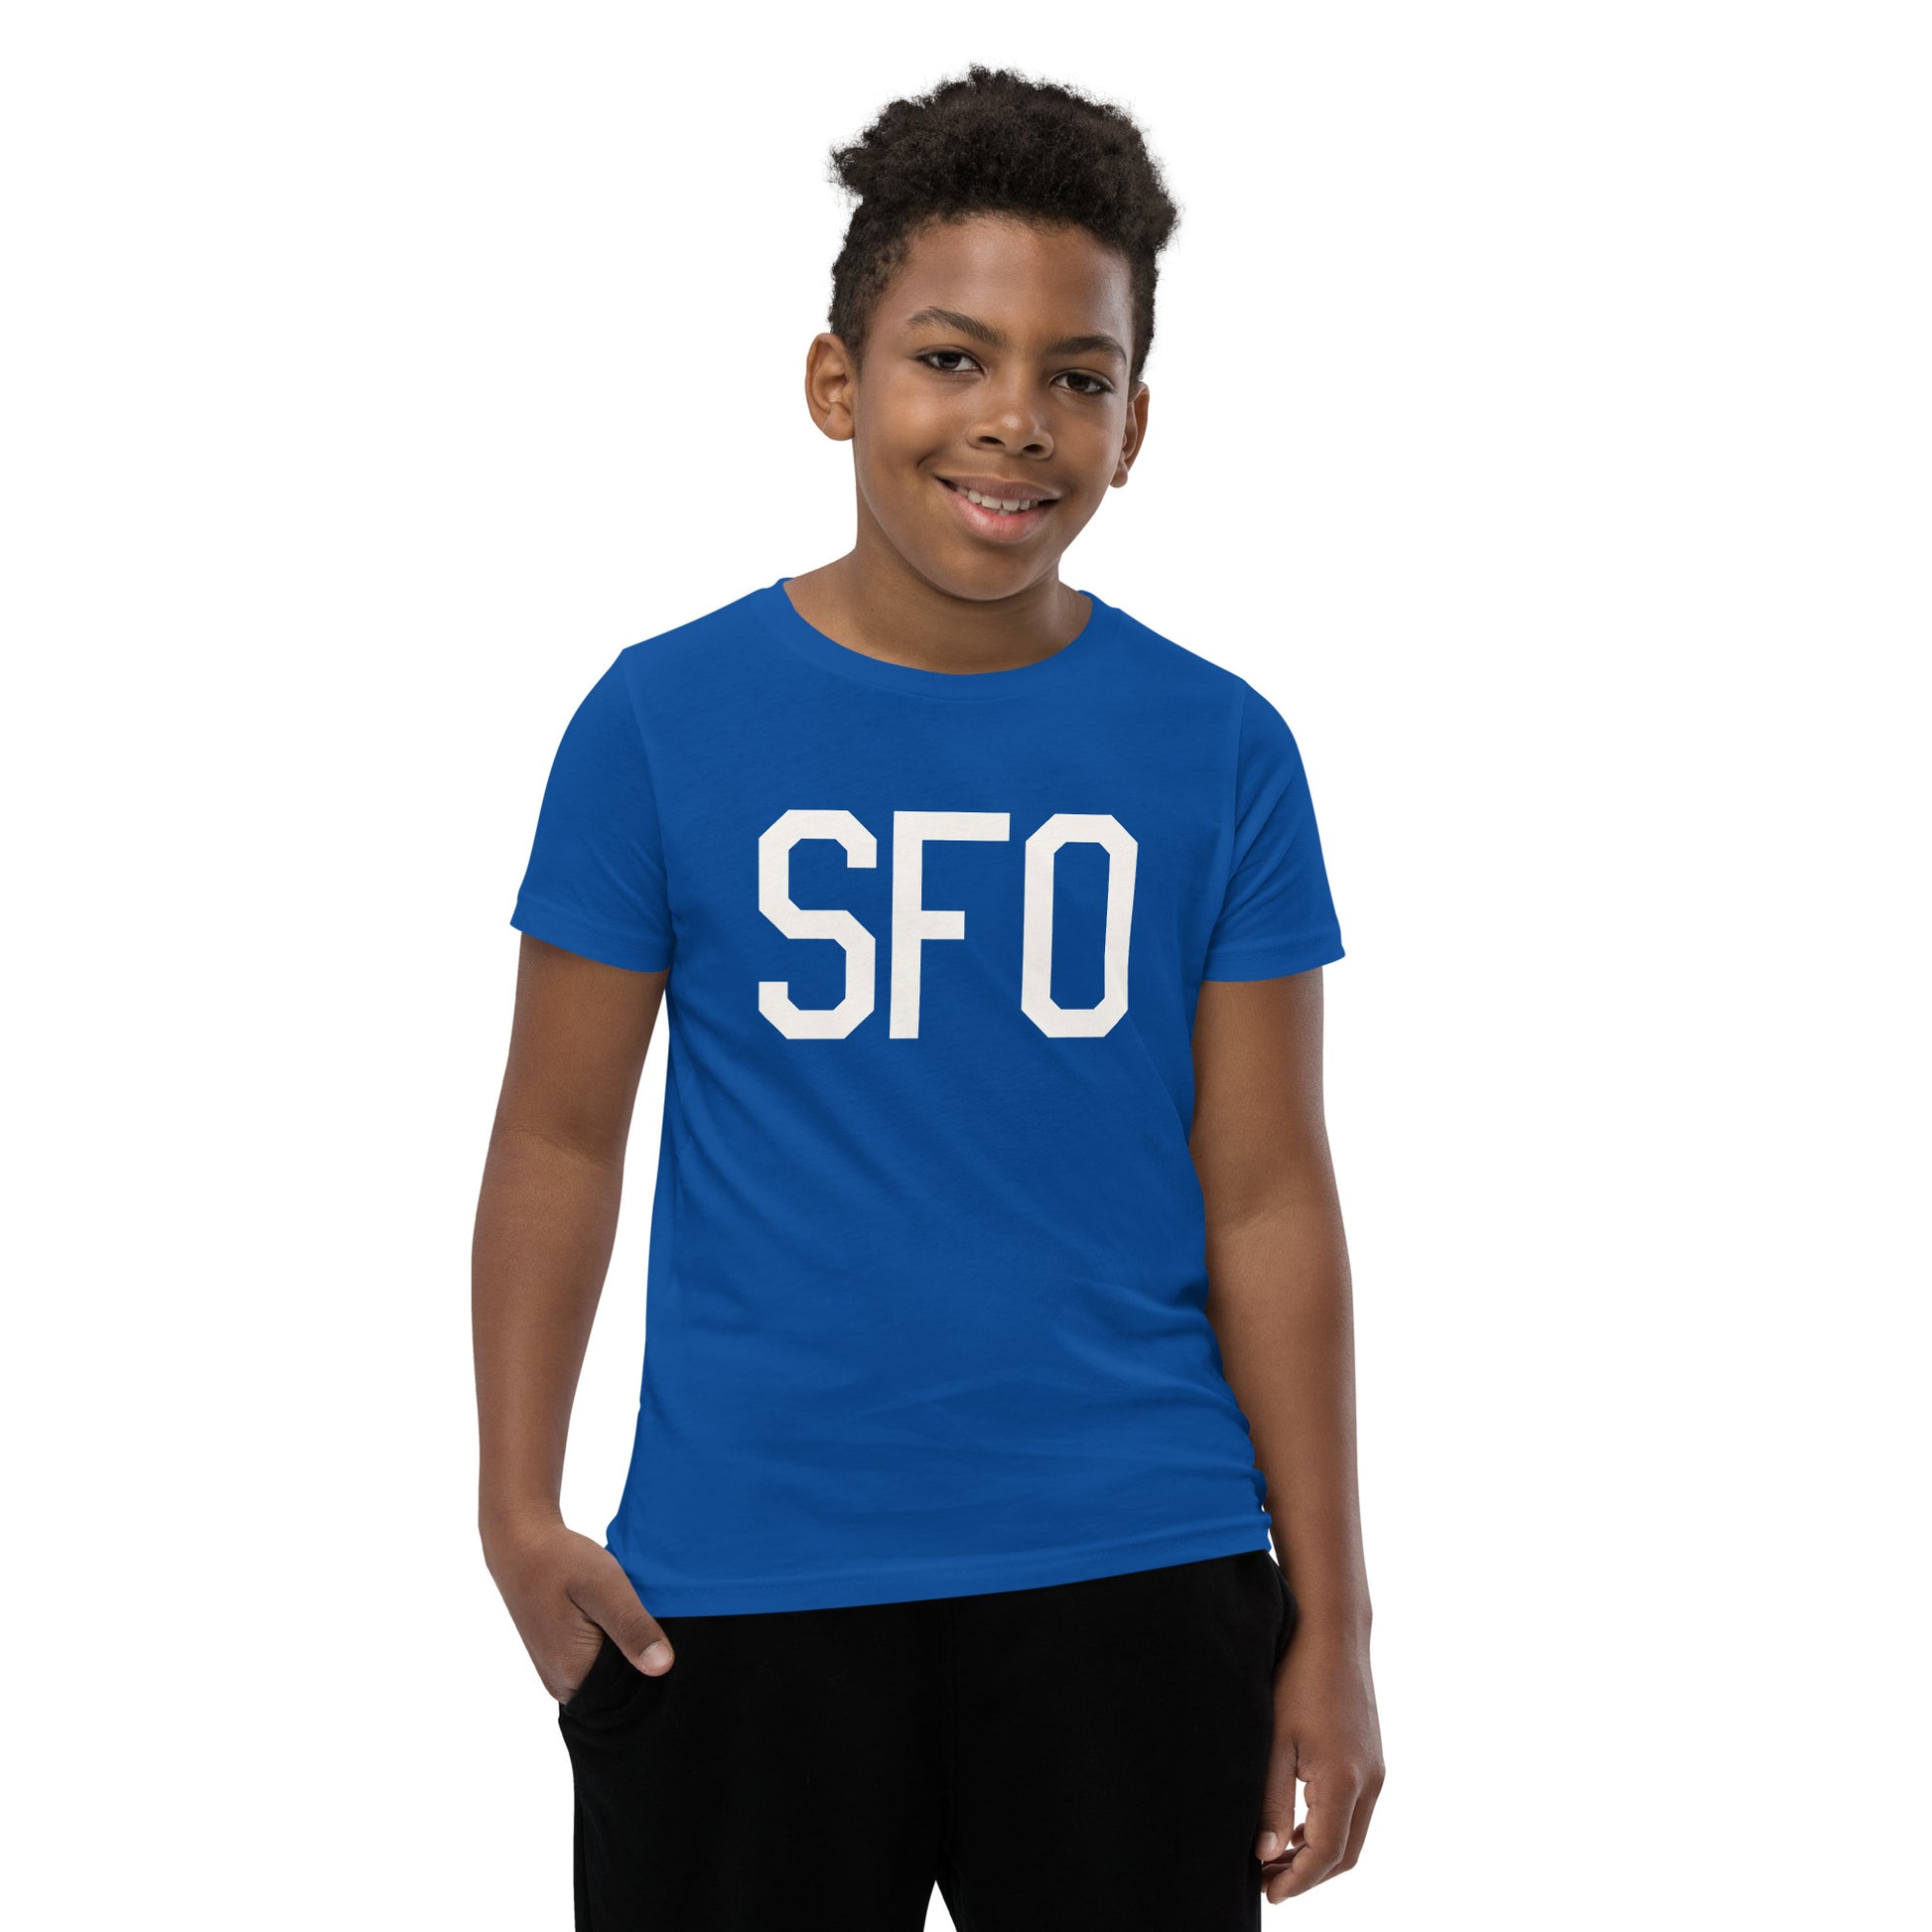 Kid's T-Shirt - White Graphic • SFO San Francisco • YHM Designs - Image 11